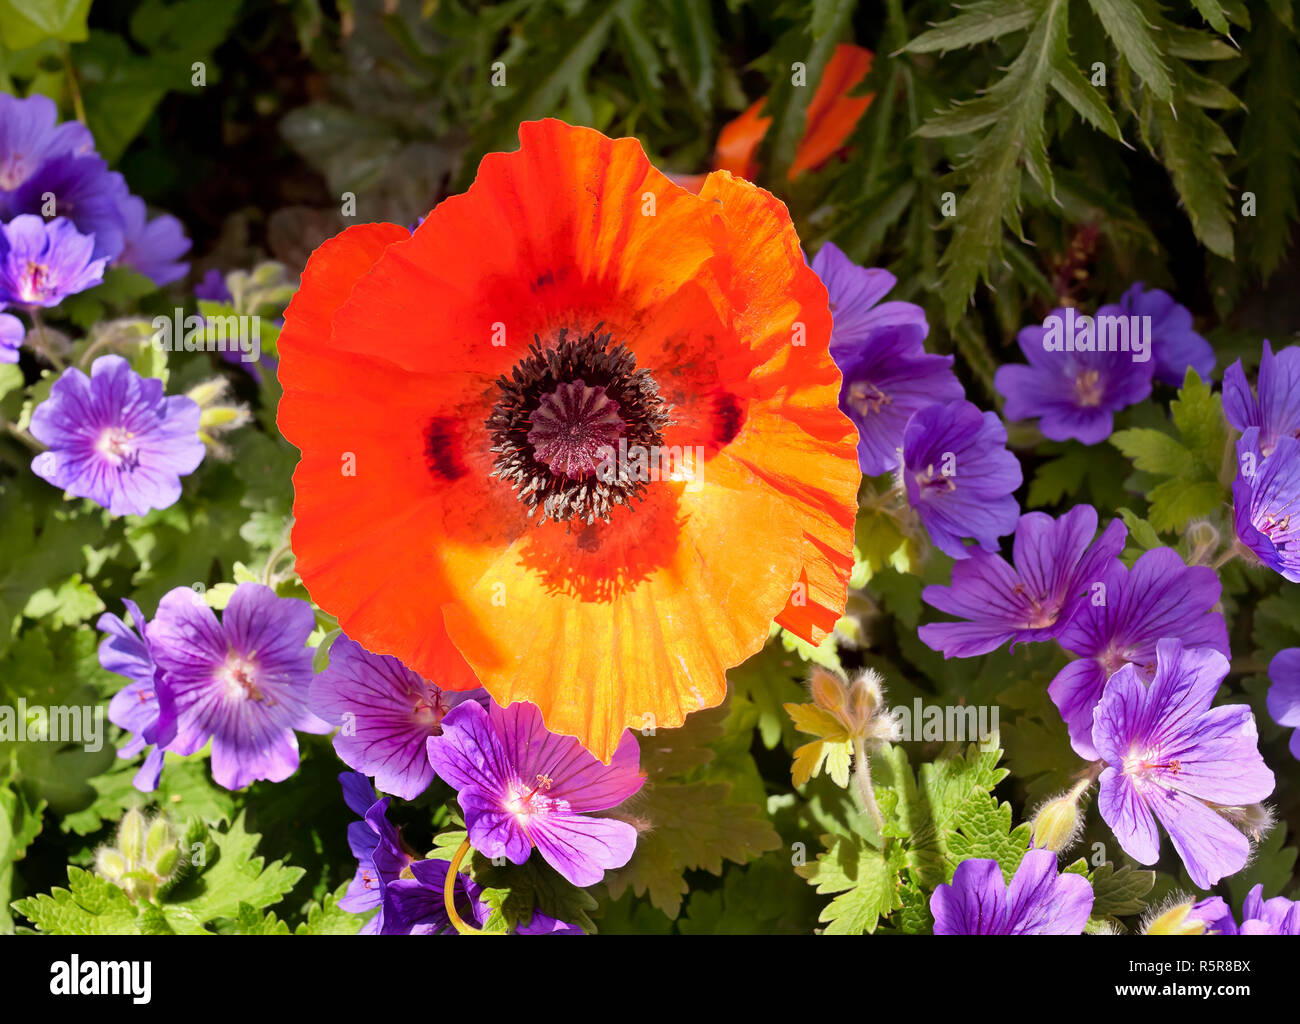 Red poppy with blue geranium flowers Stock Photo